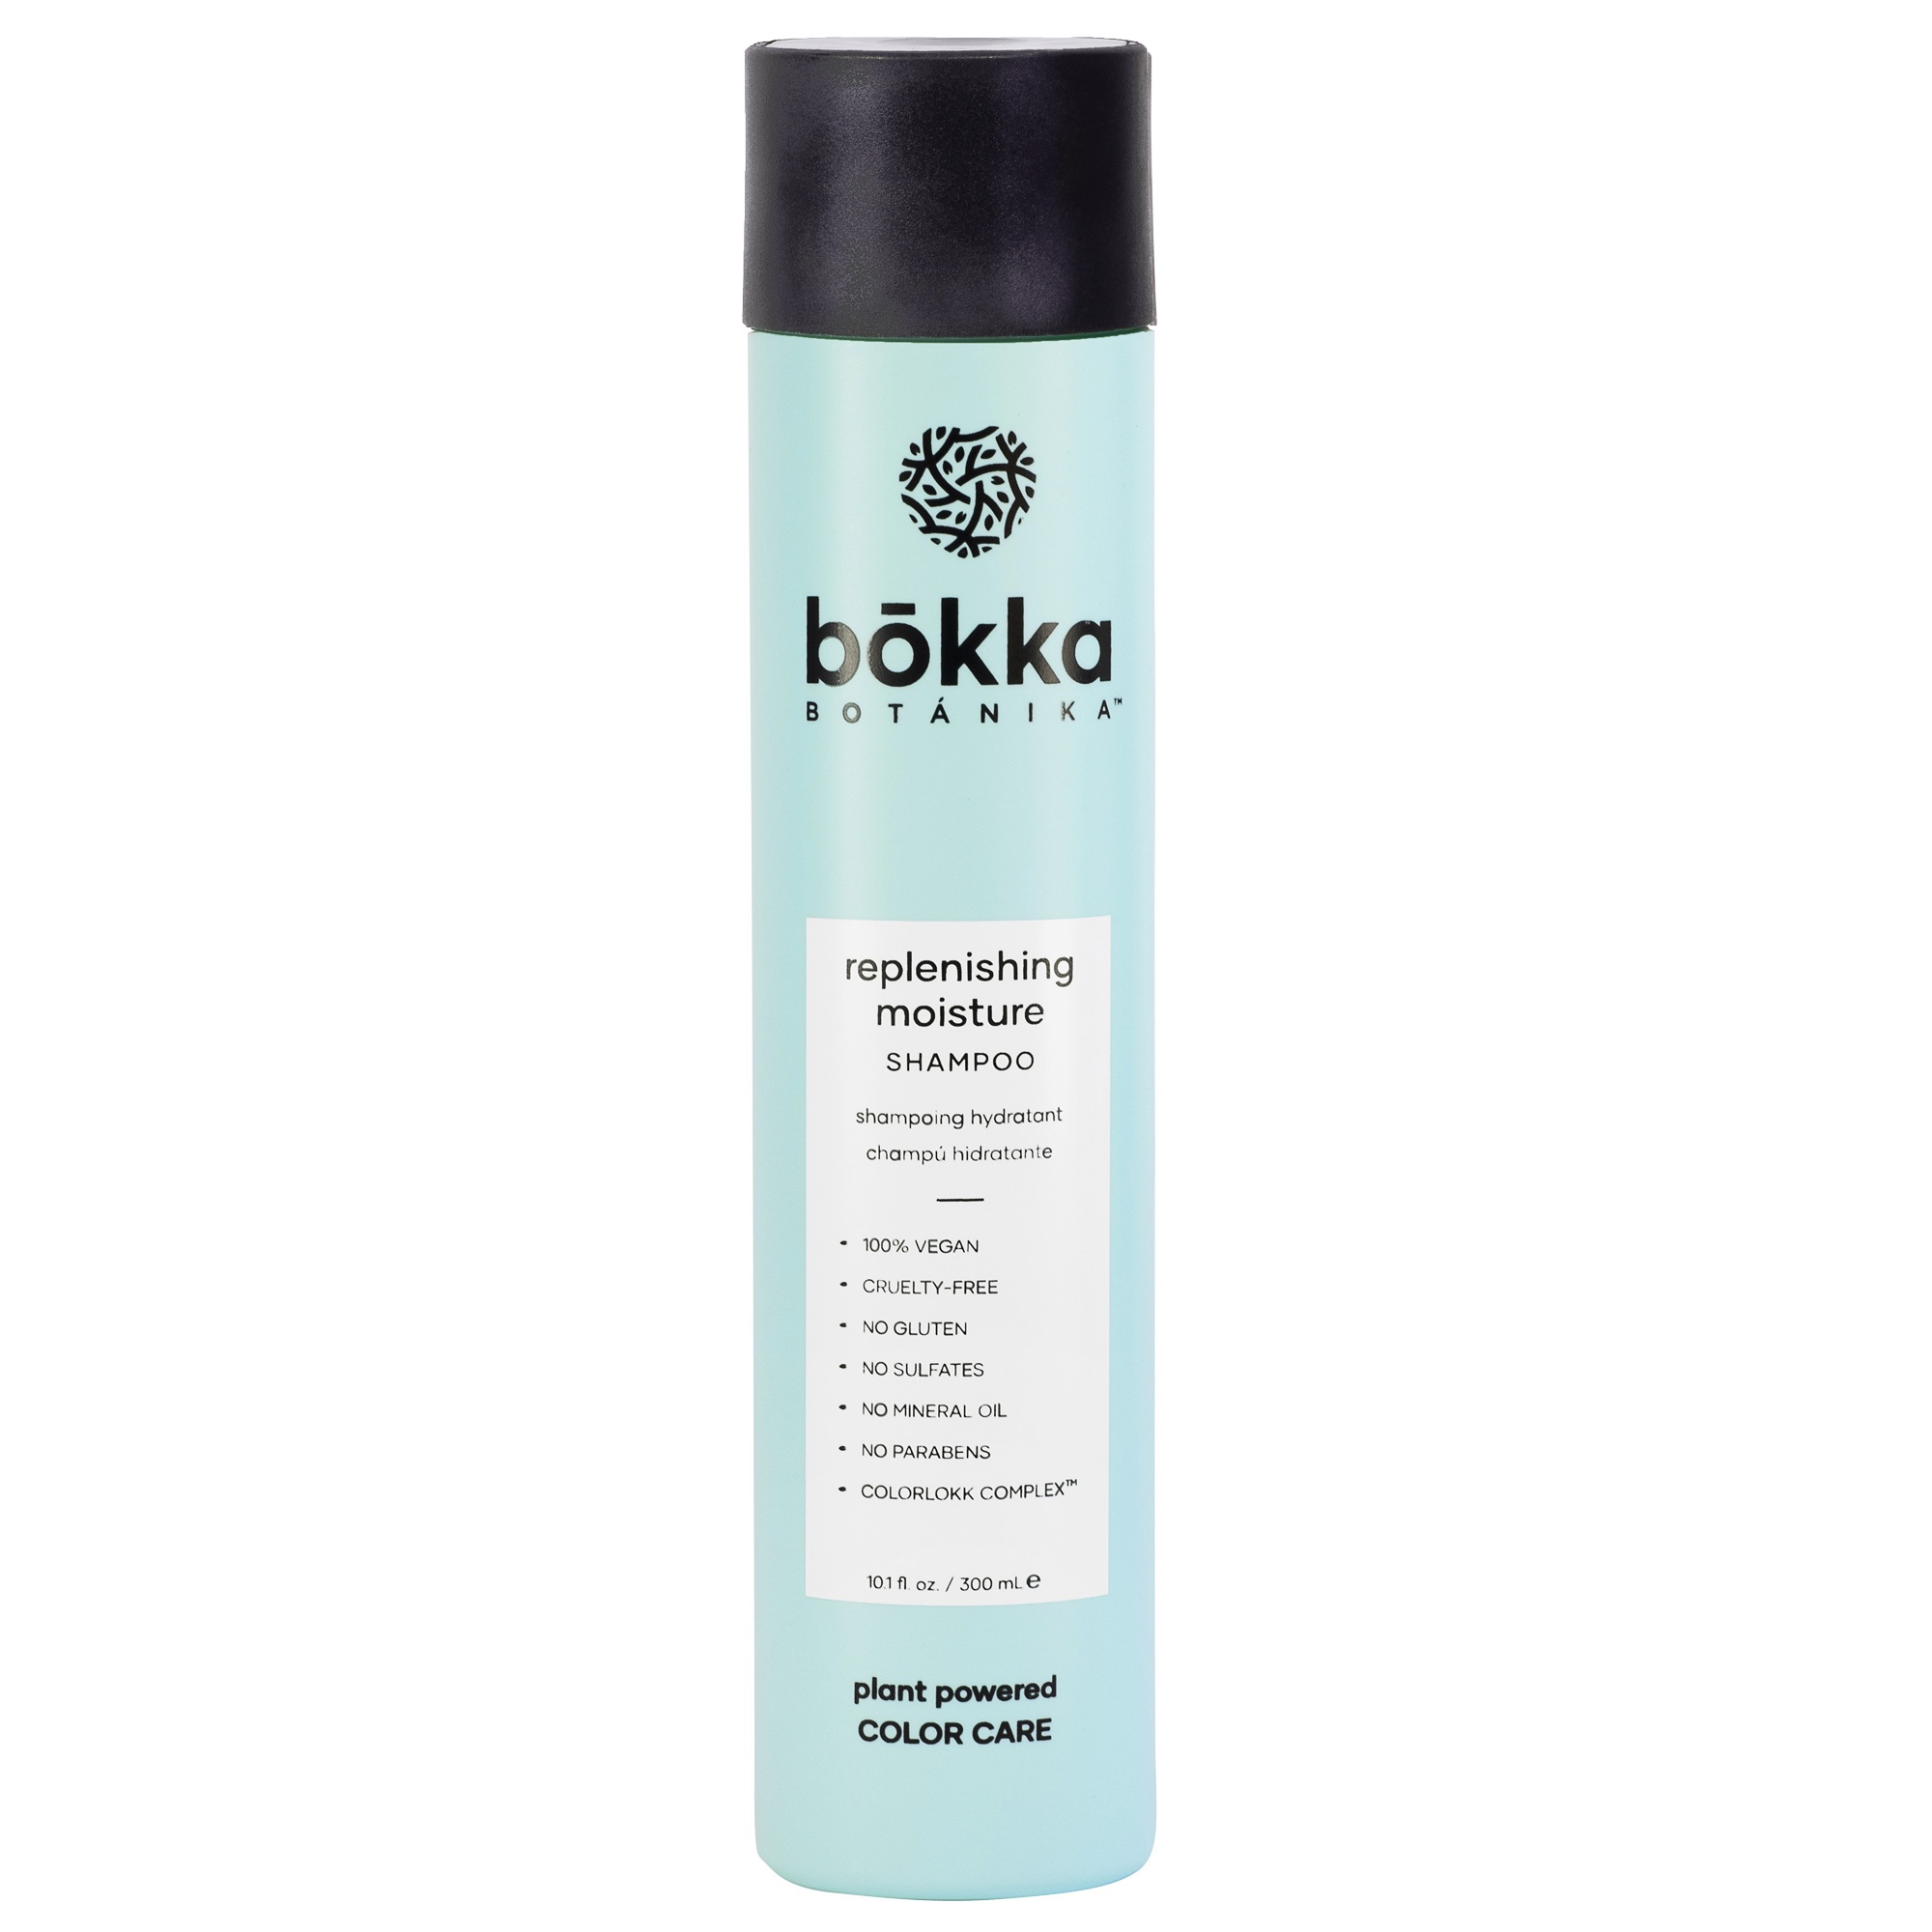 bokka BOTANICA Replenishing Moisture Shampoo 10.1oz